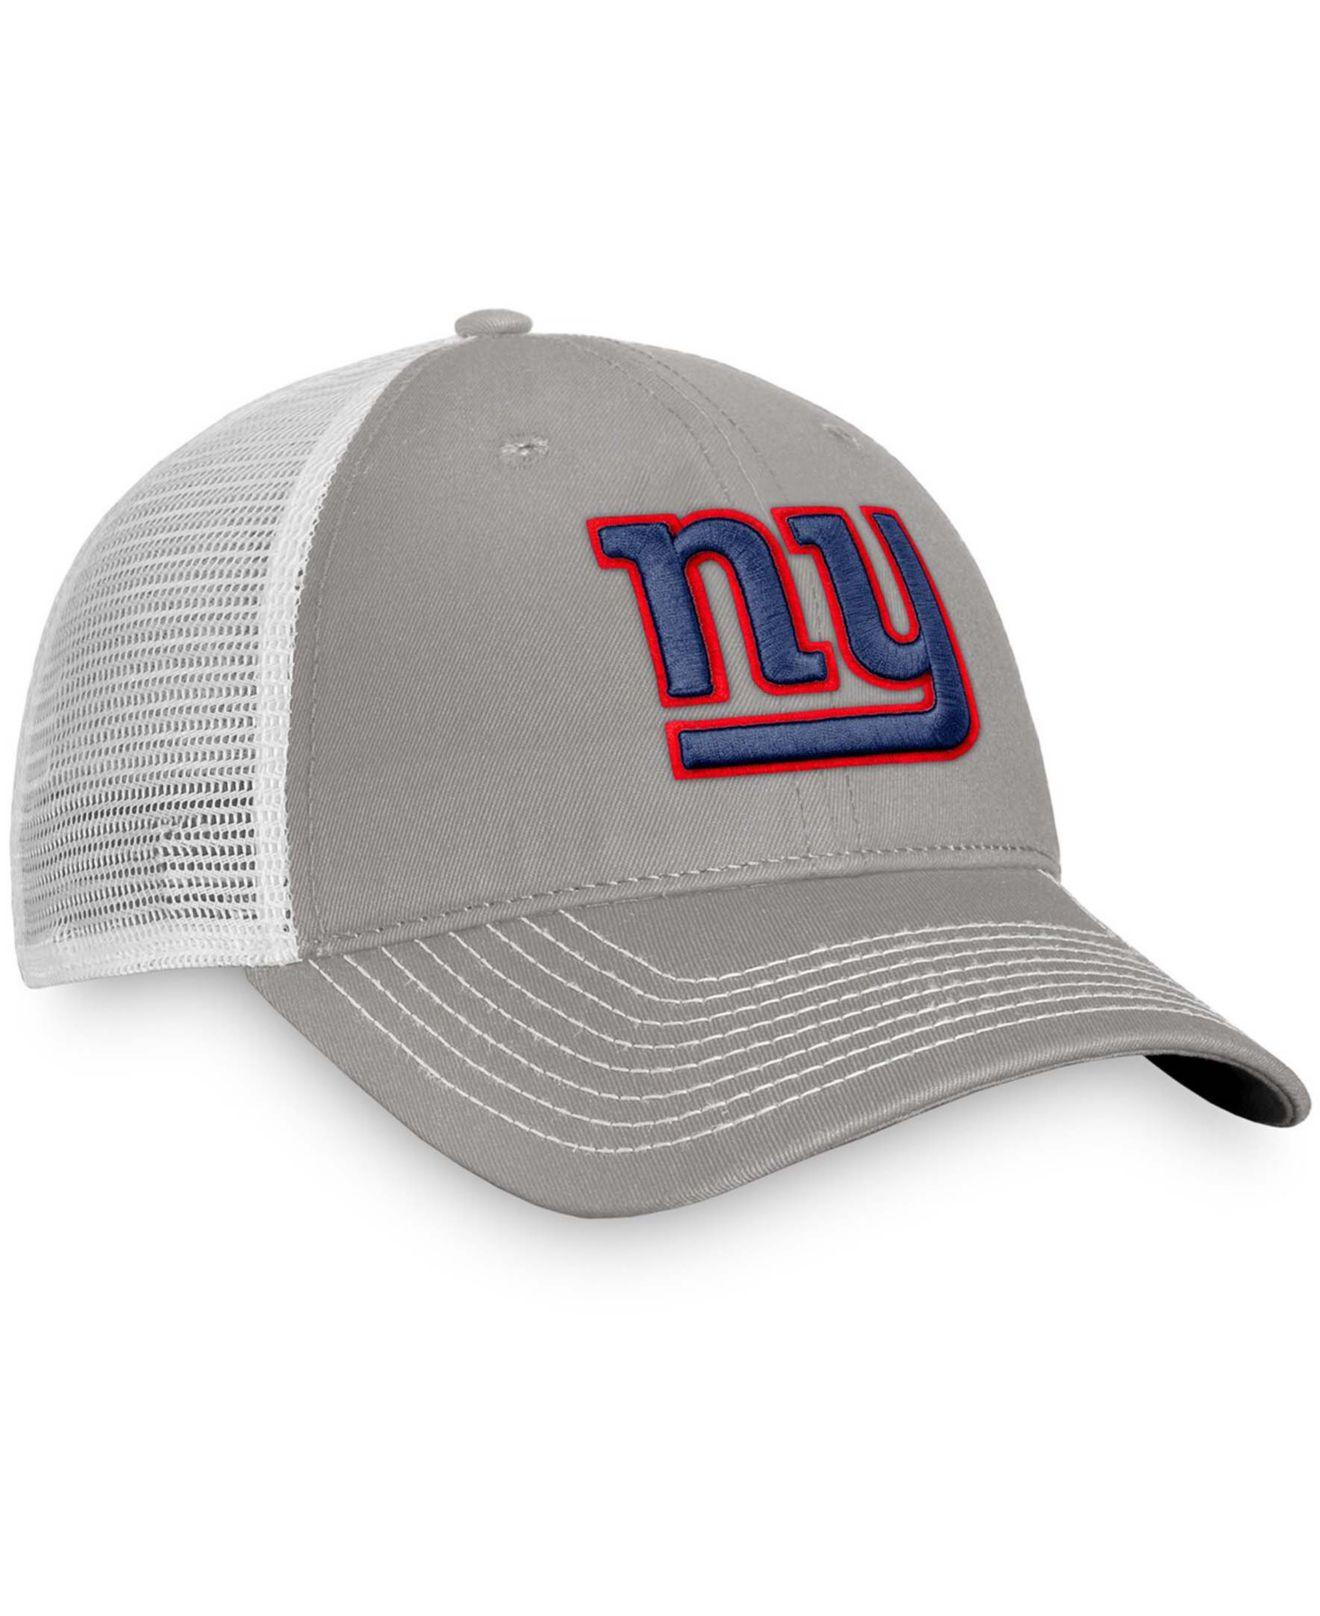 new york giants trucker hat